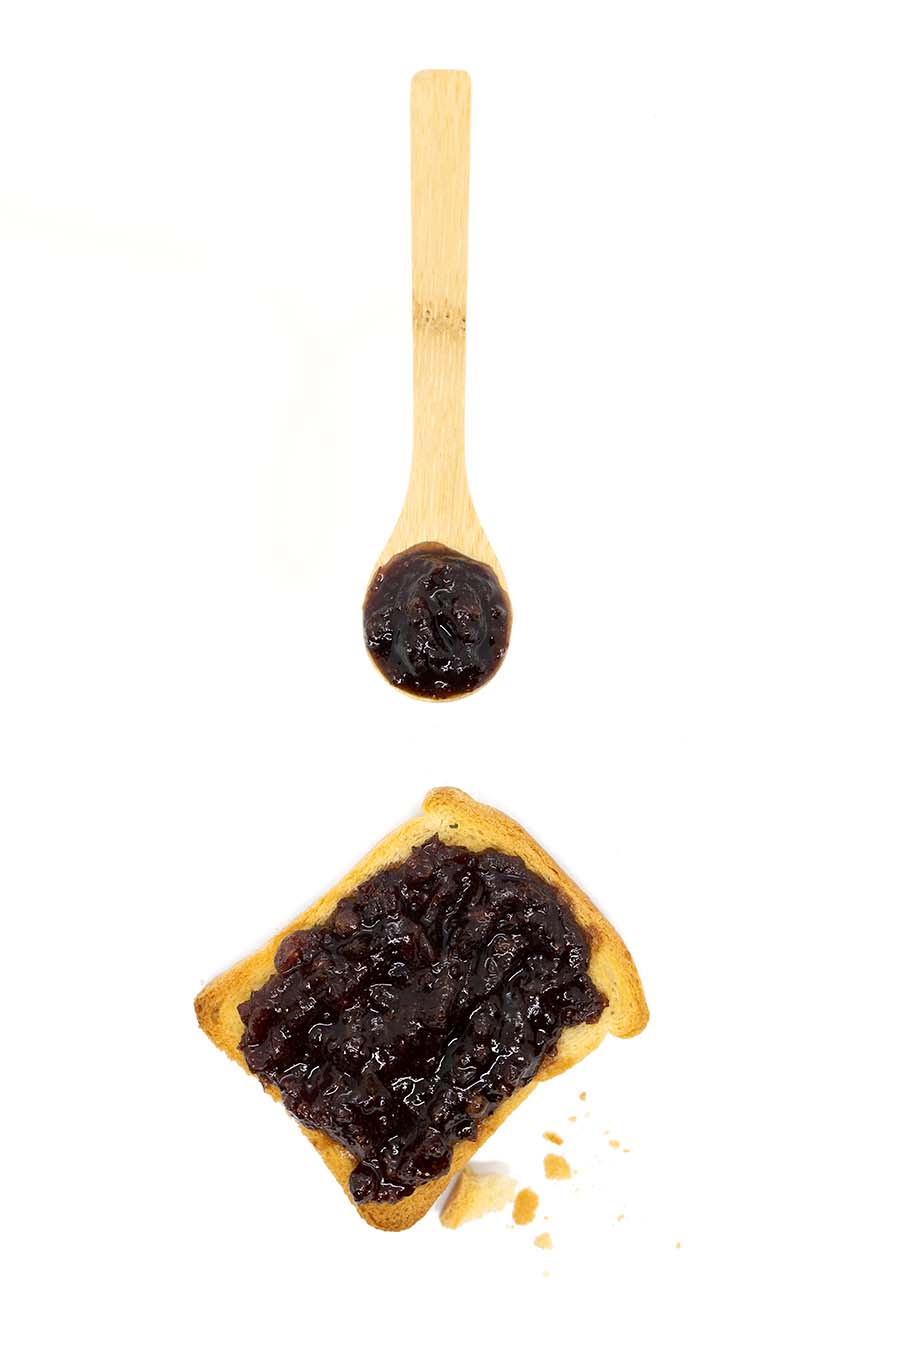 Artisanal Wild Lingonberry Jam spoon toast Health from Europe